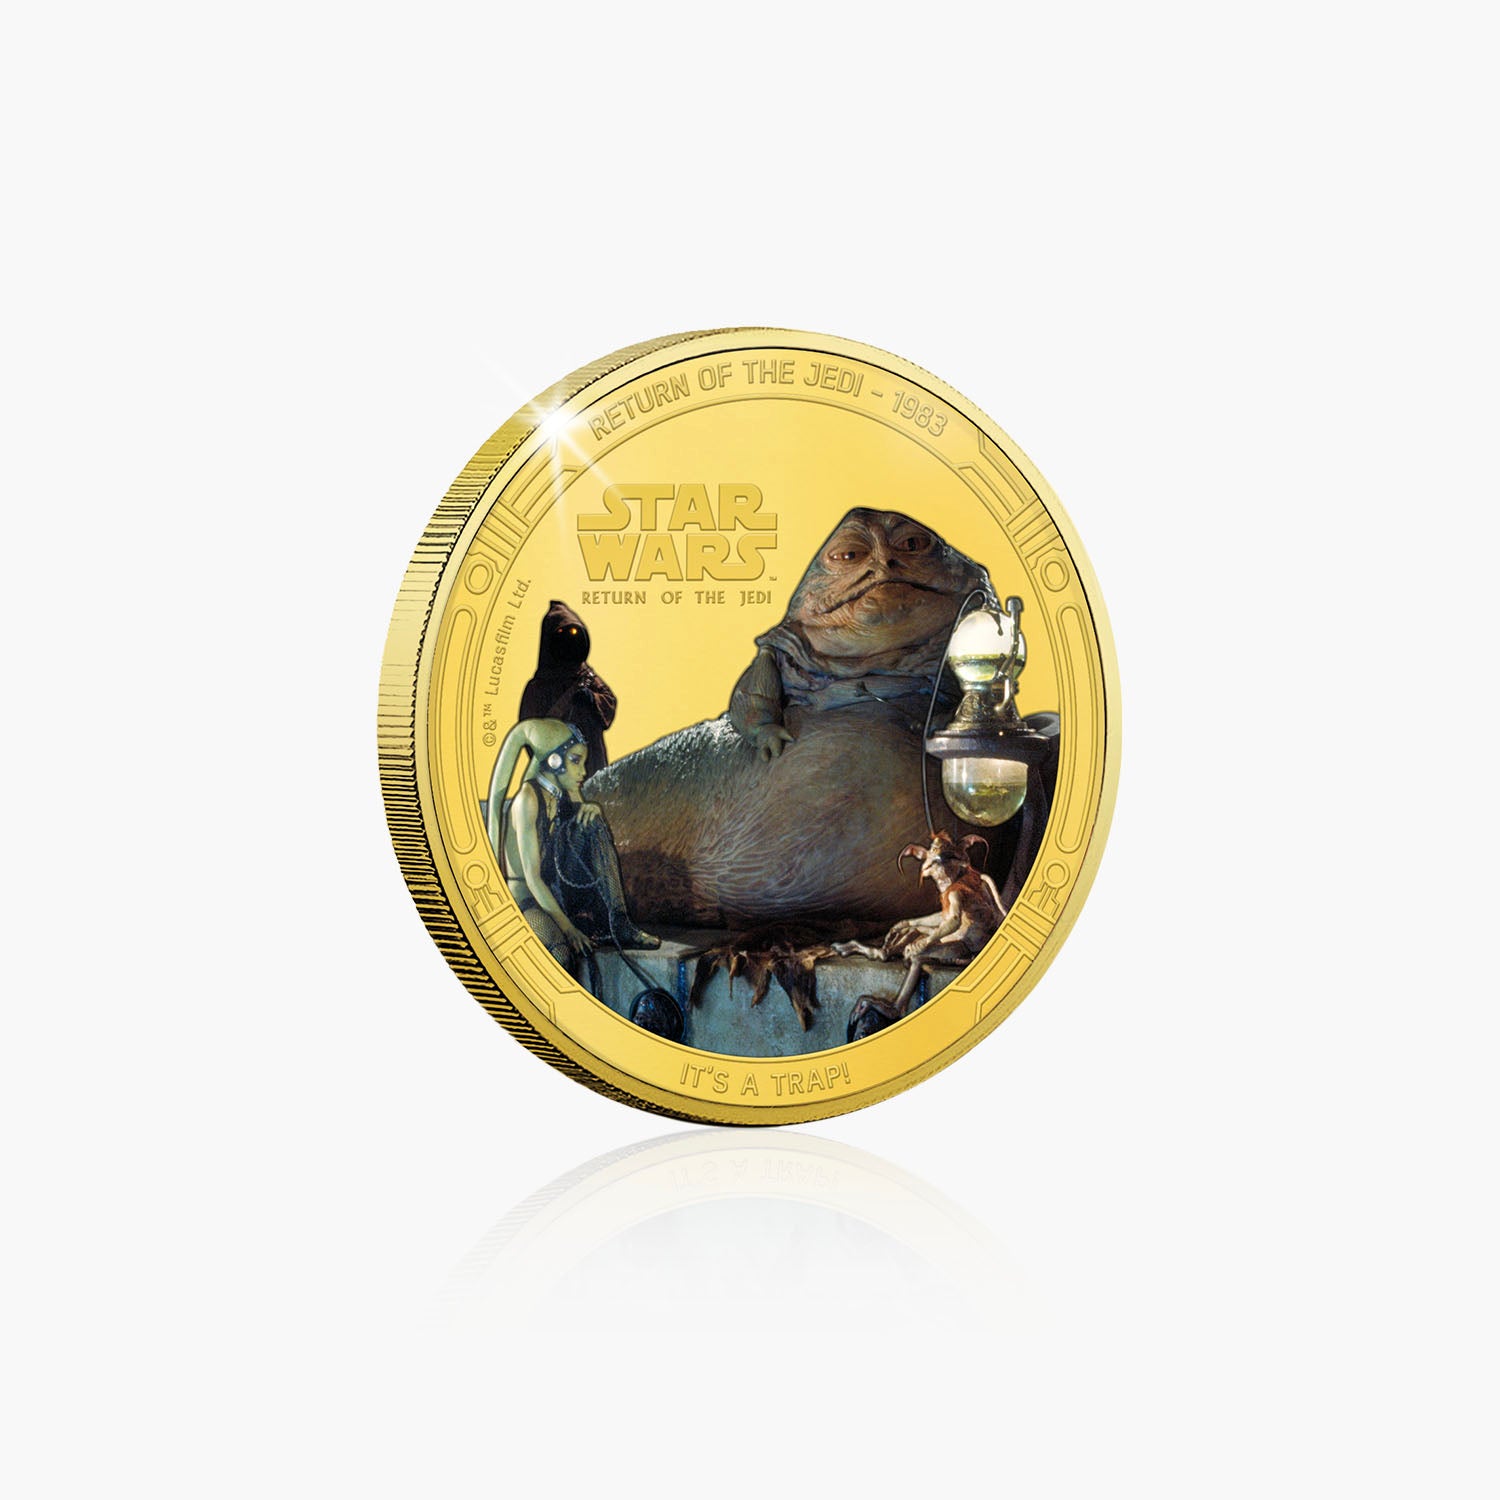 Return of the Jedi Gold Plated Commemorative